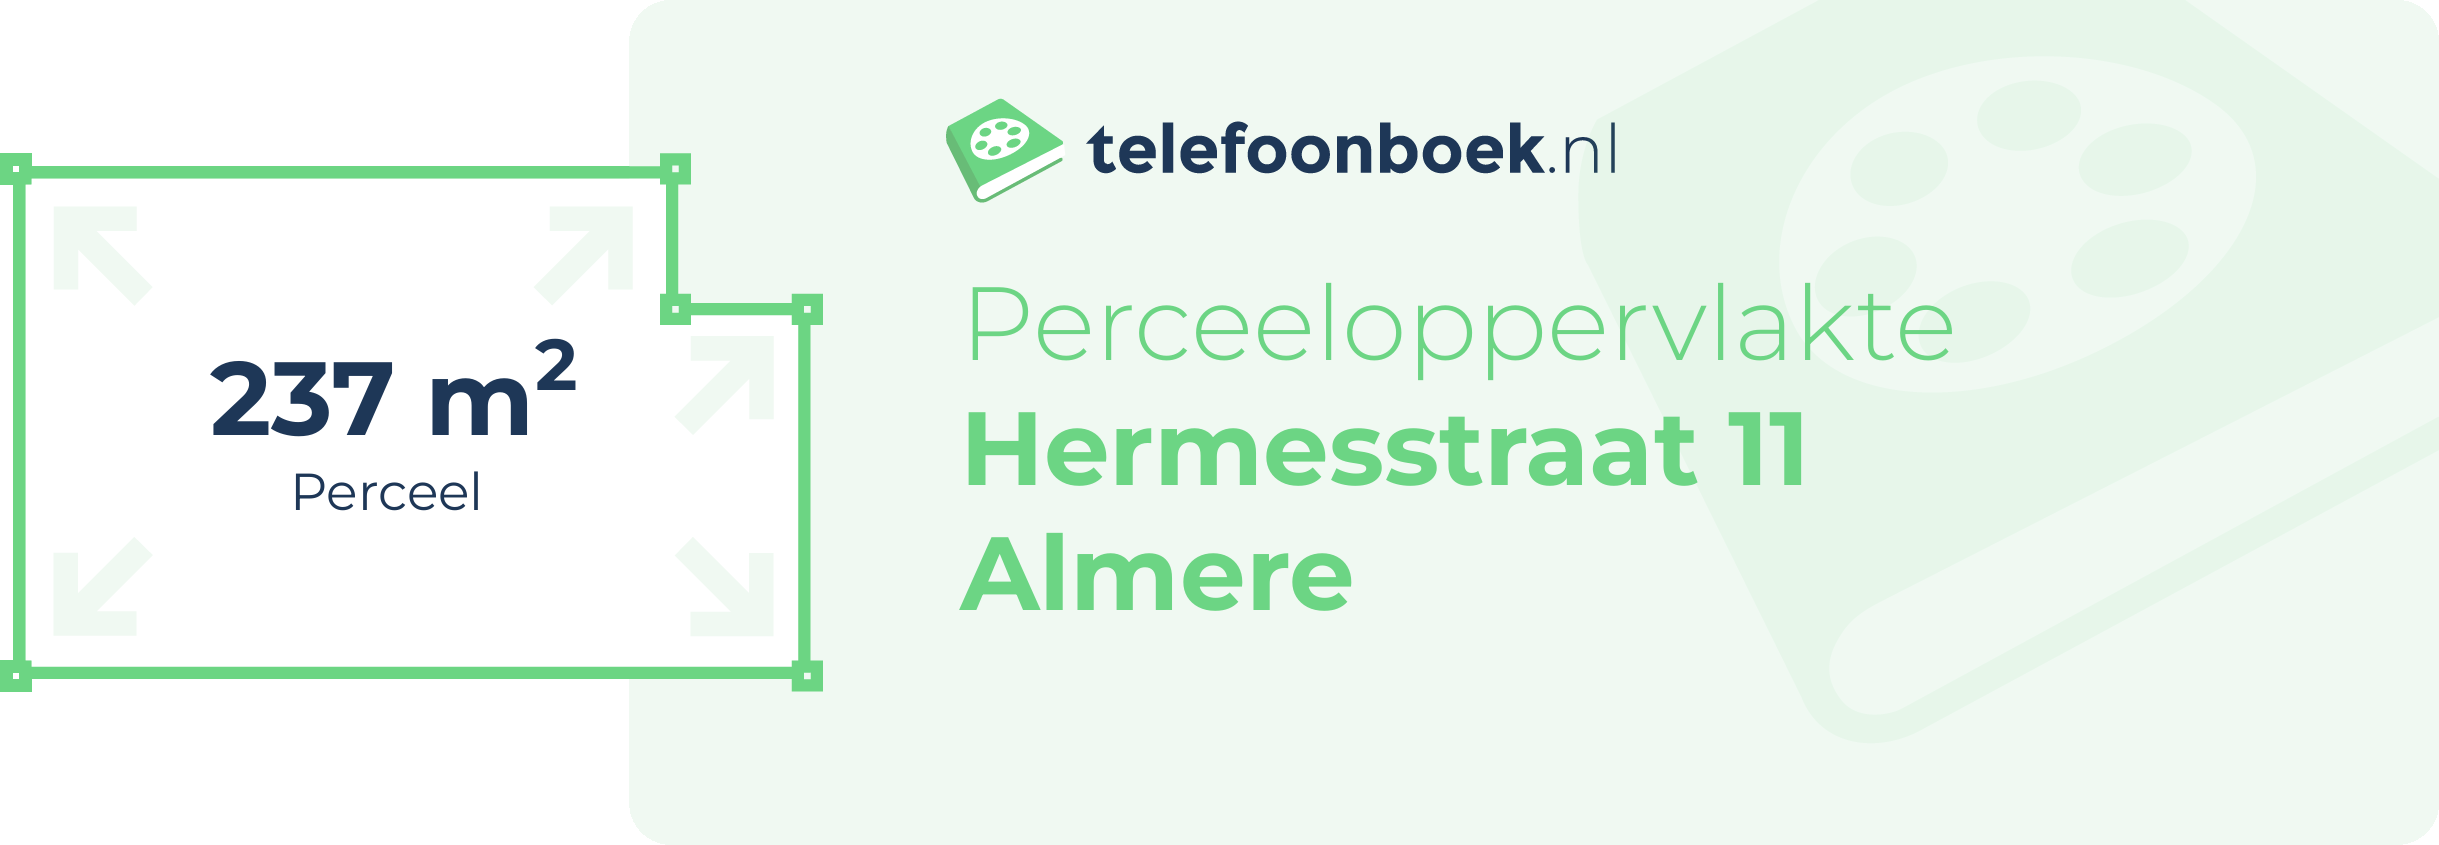 Perceeloppervlakte Hermesstraat 11 Almere